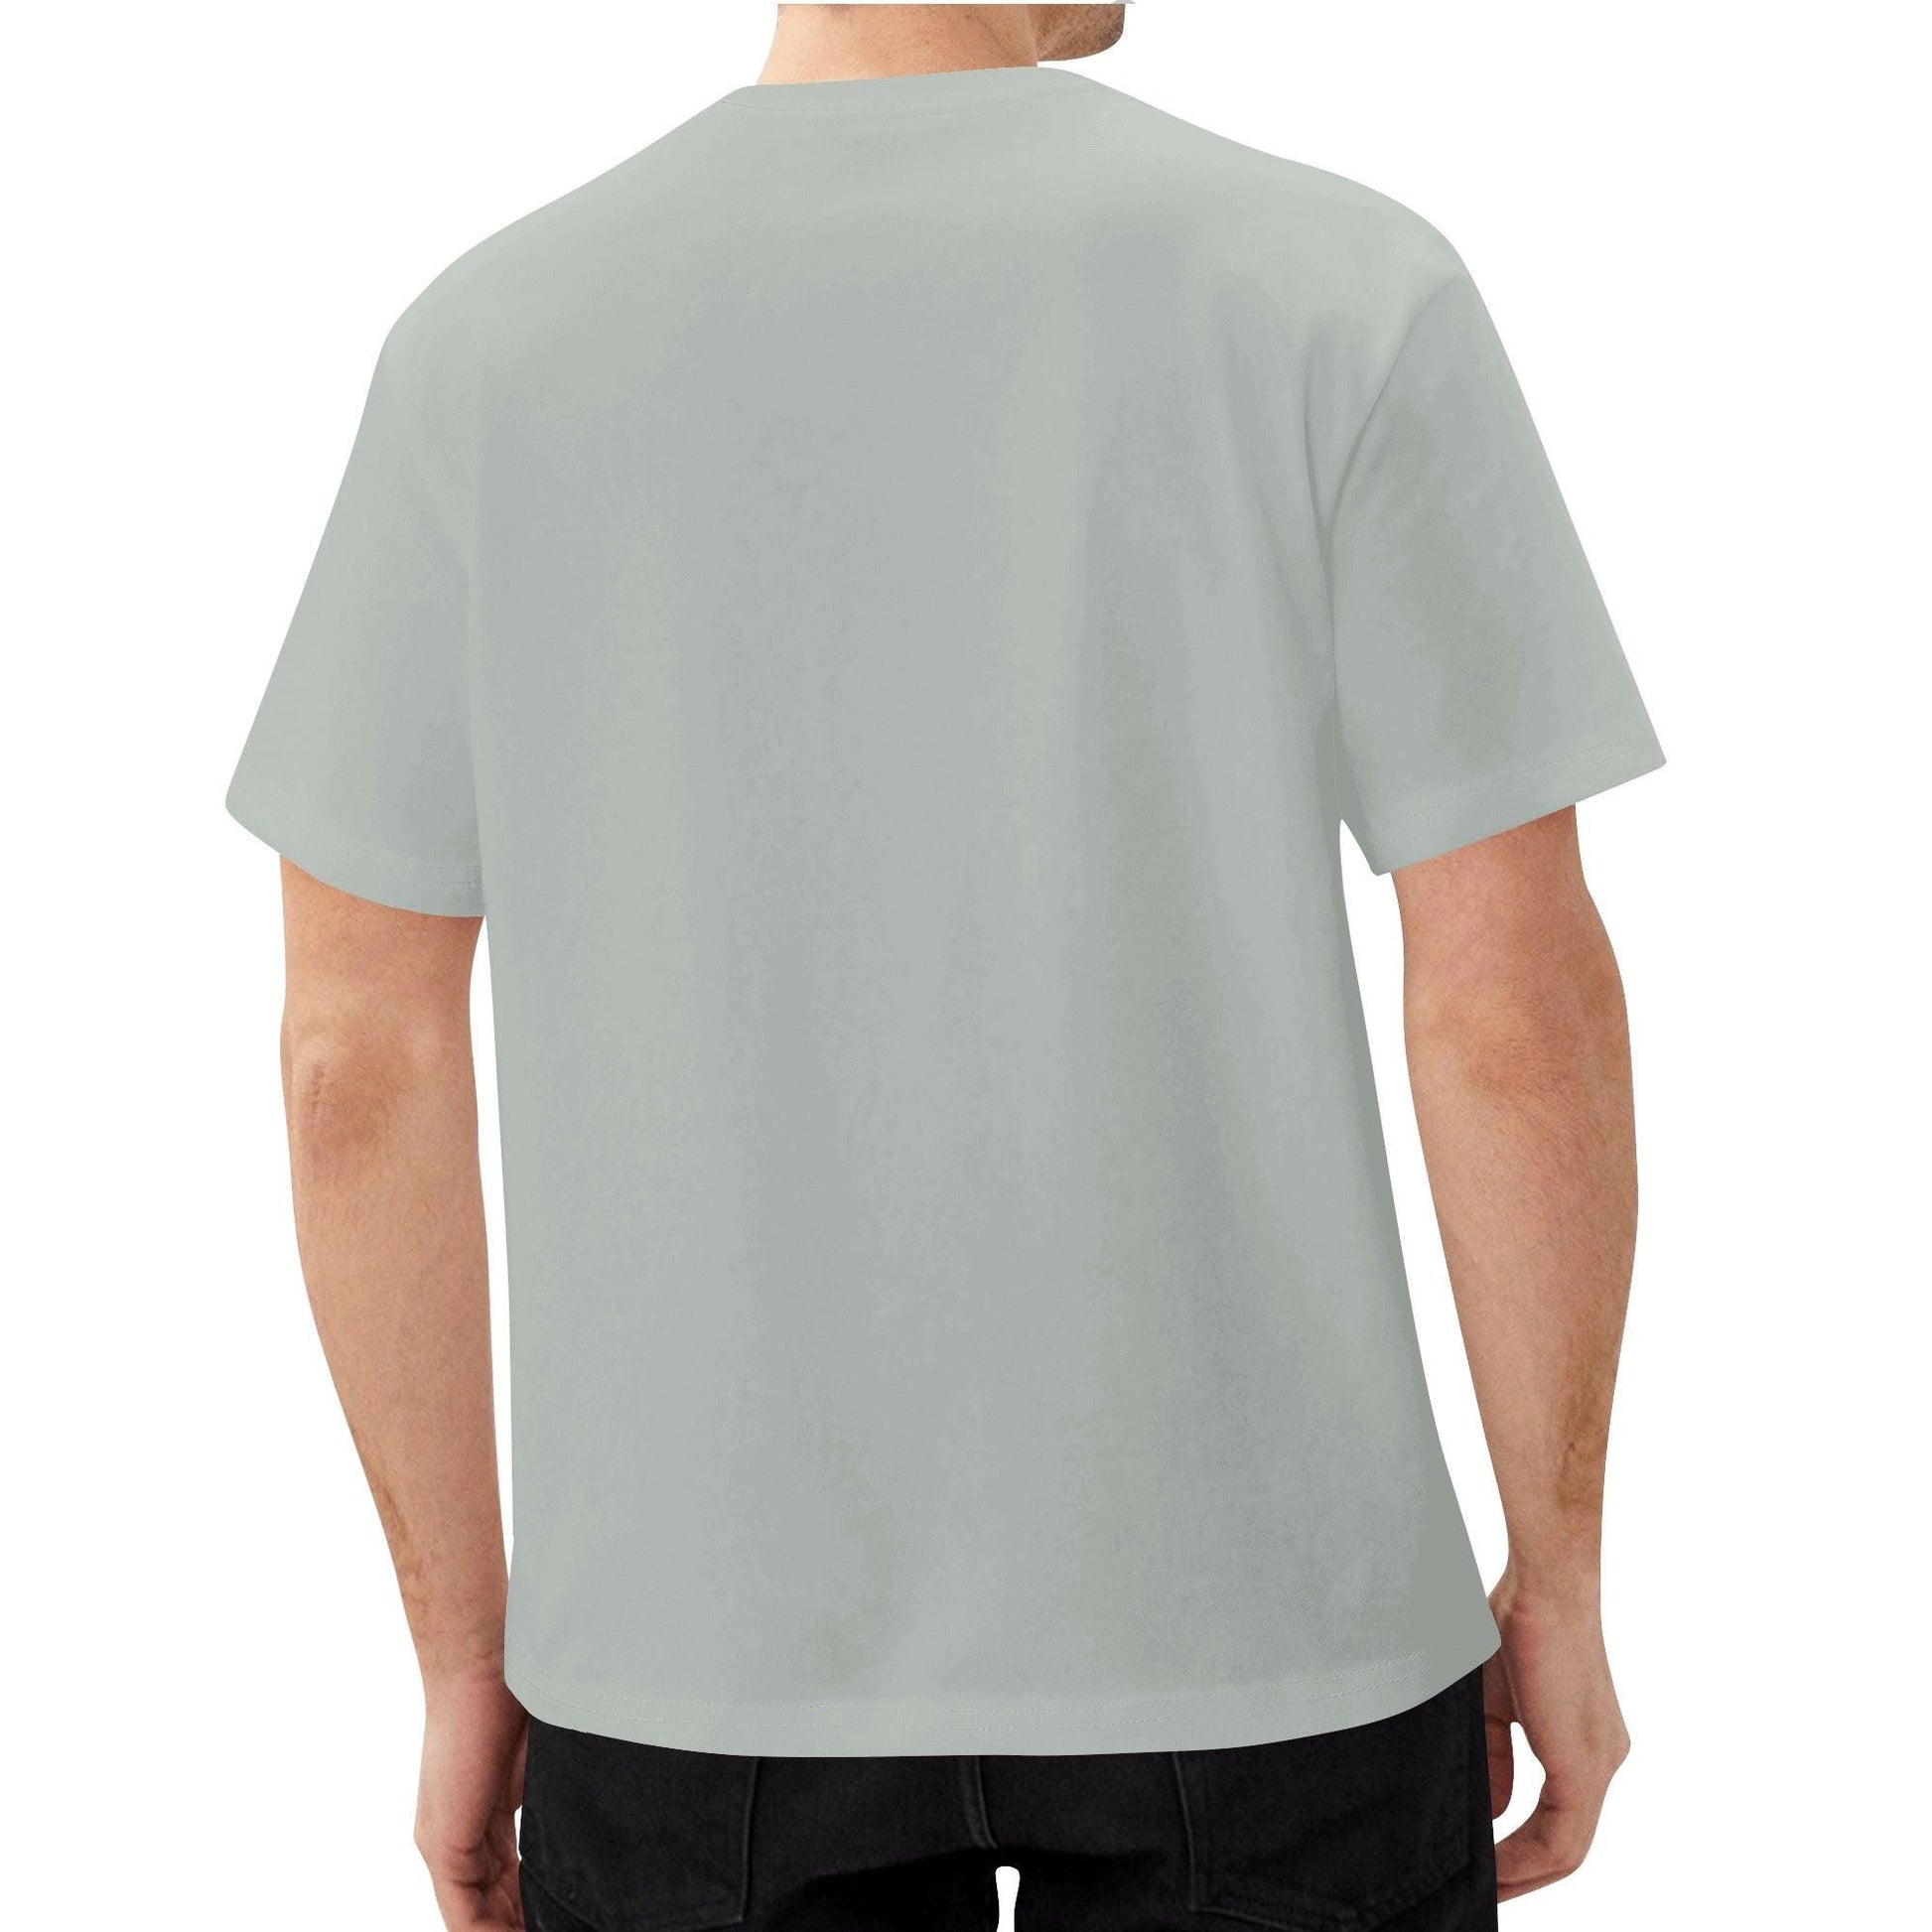 Stay Weird T-Shirt Sea Green - NX Vogue New York | Luxury Redefined